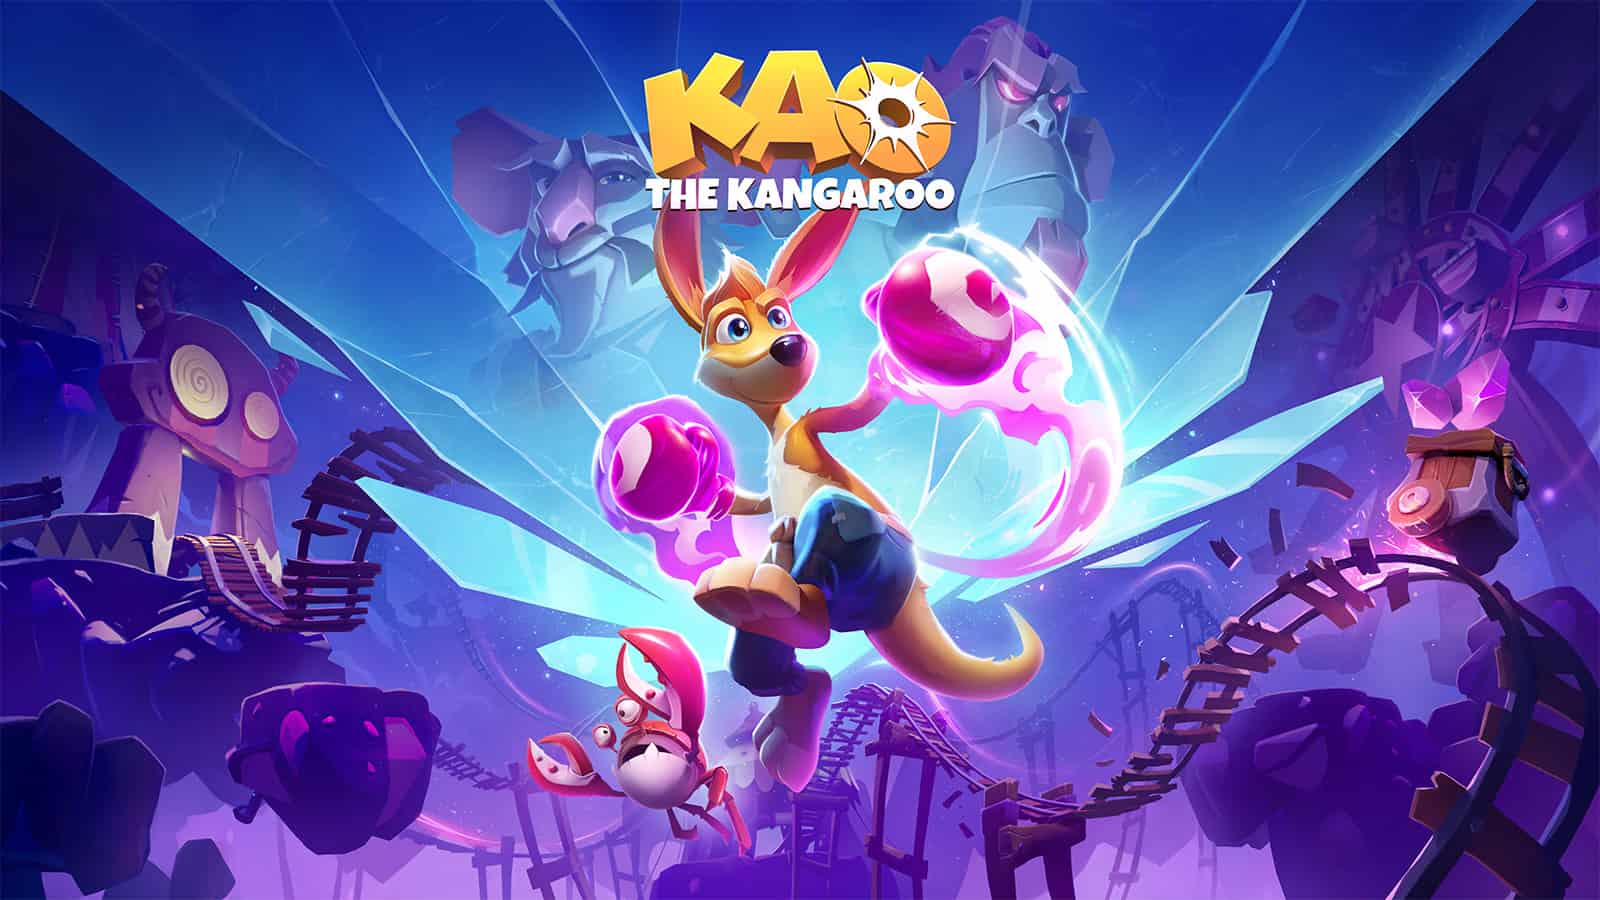 Kao The Kangaroo Celebrates Birthday With New Game Bundles And DLC